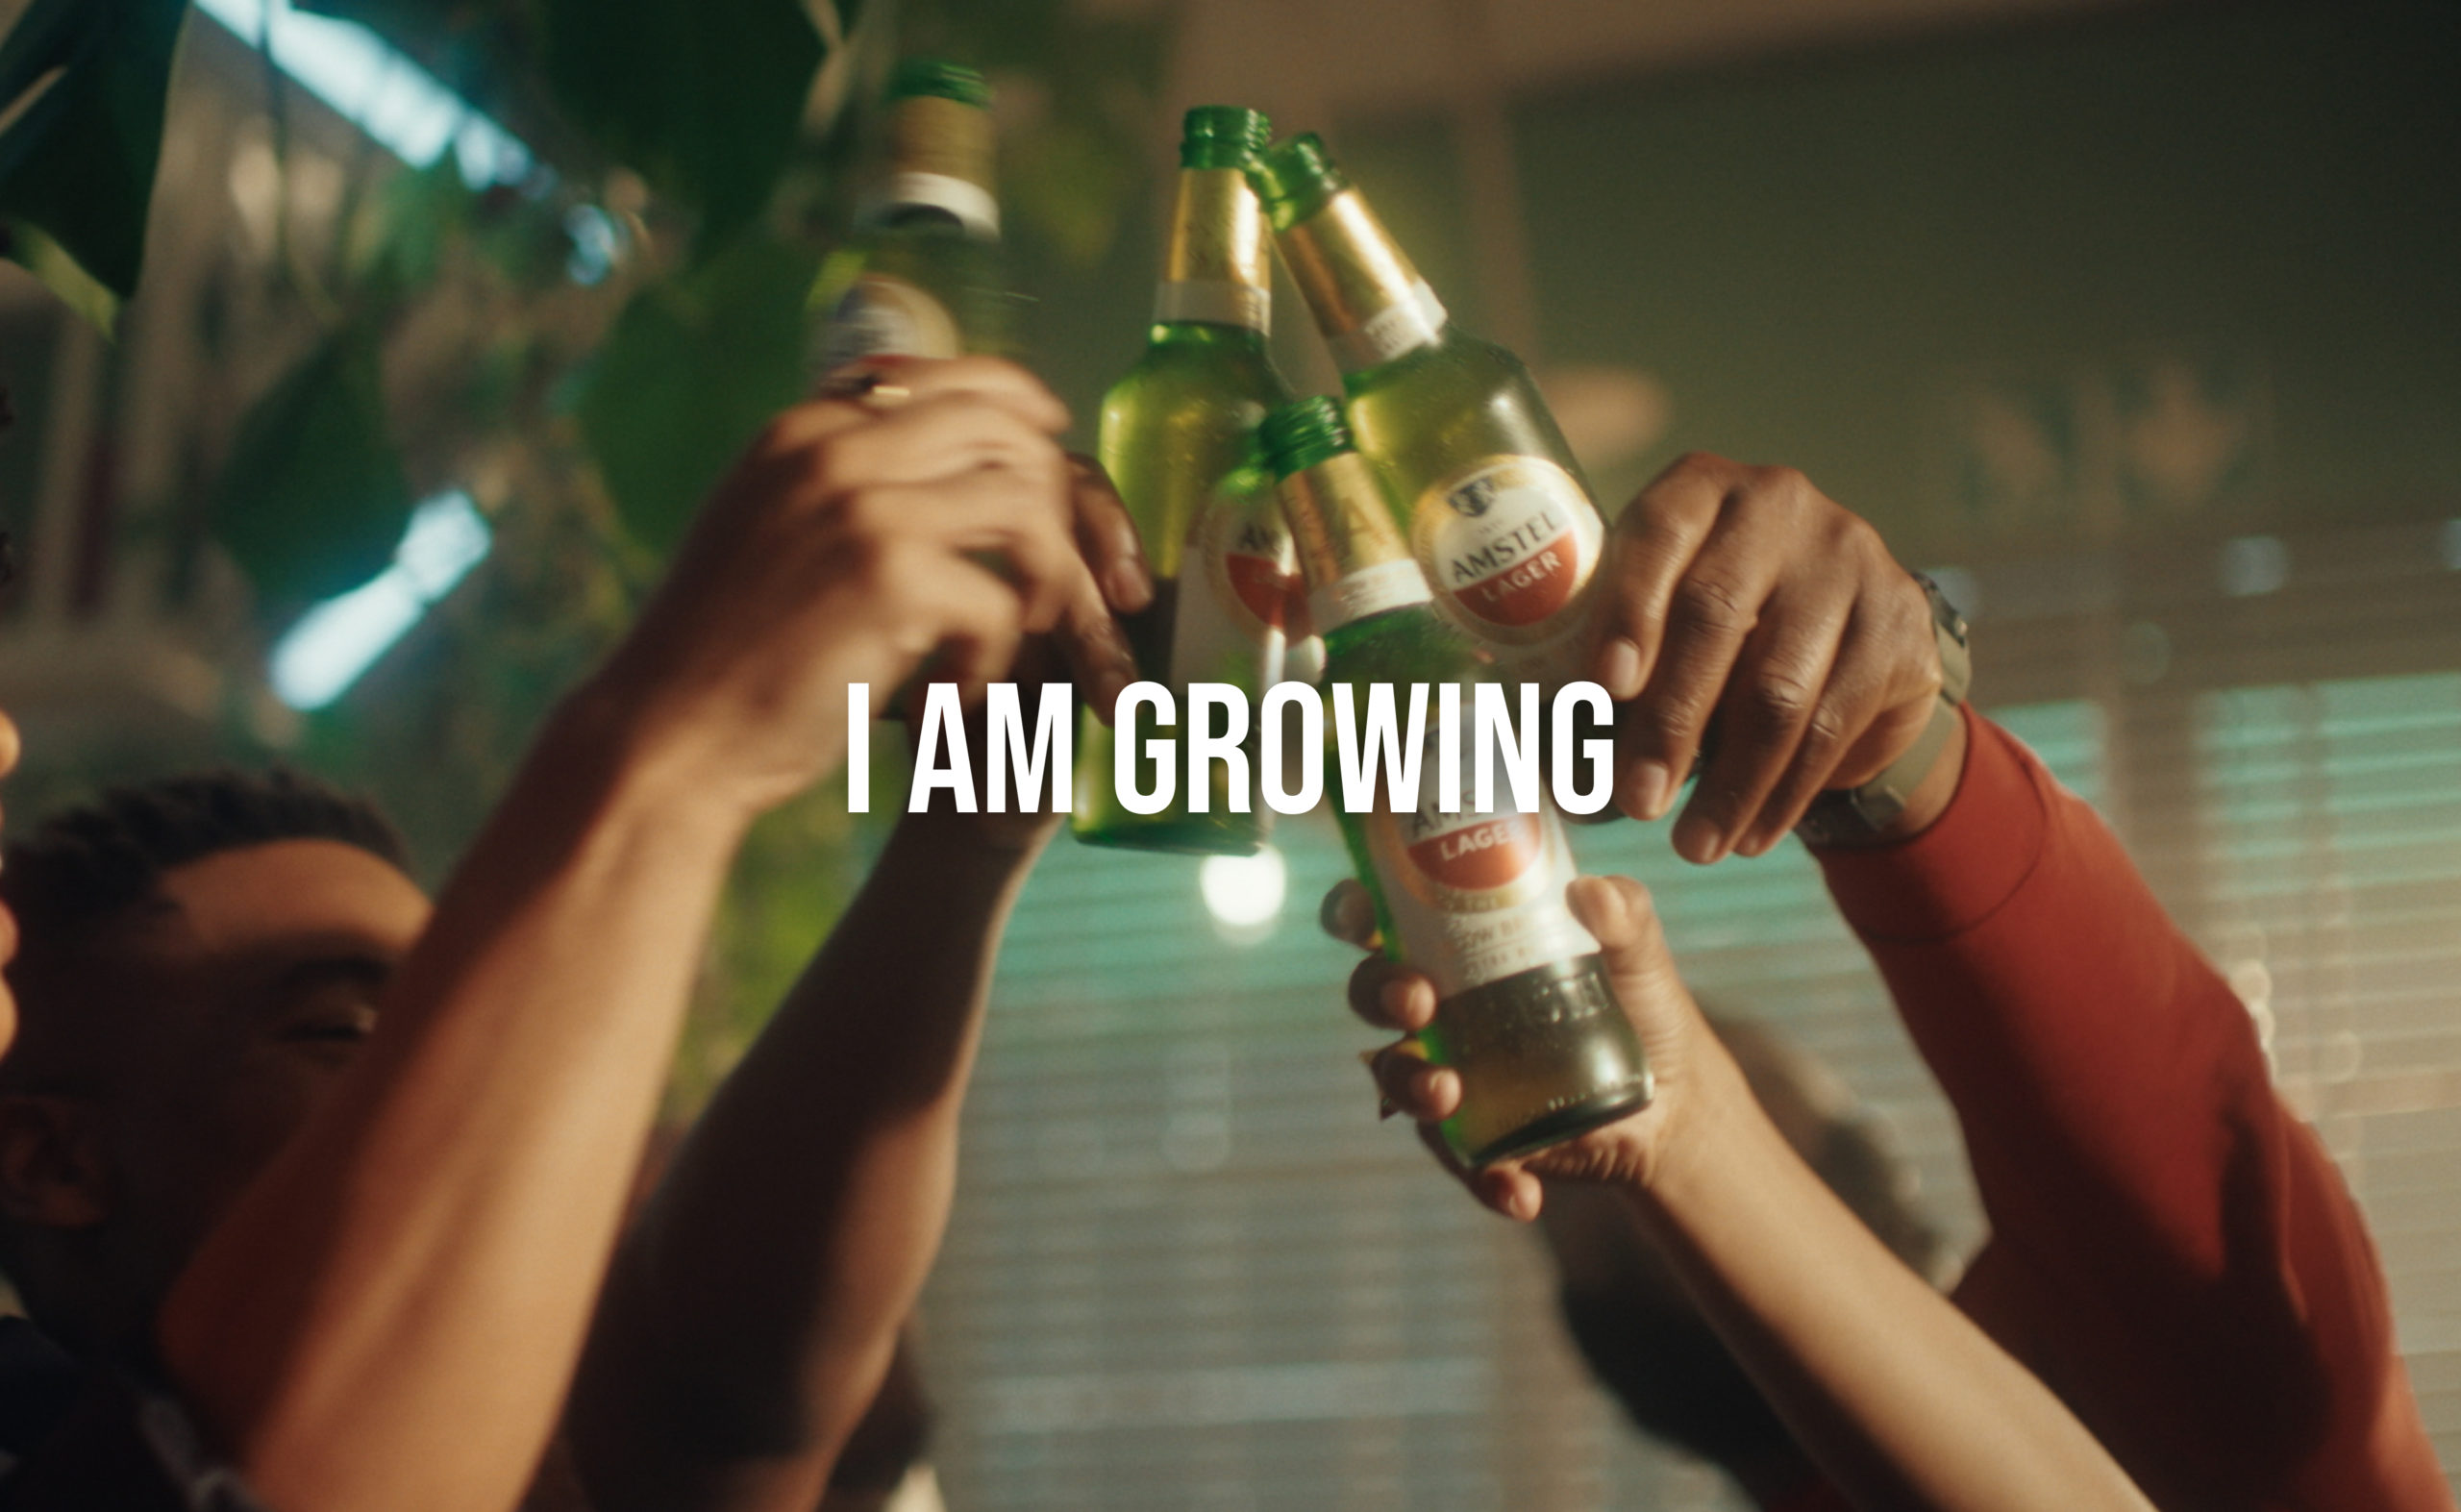 Amstel - I am growing